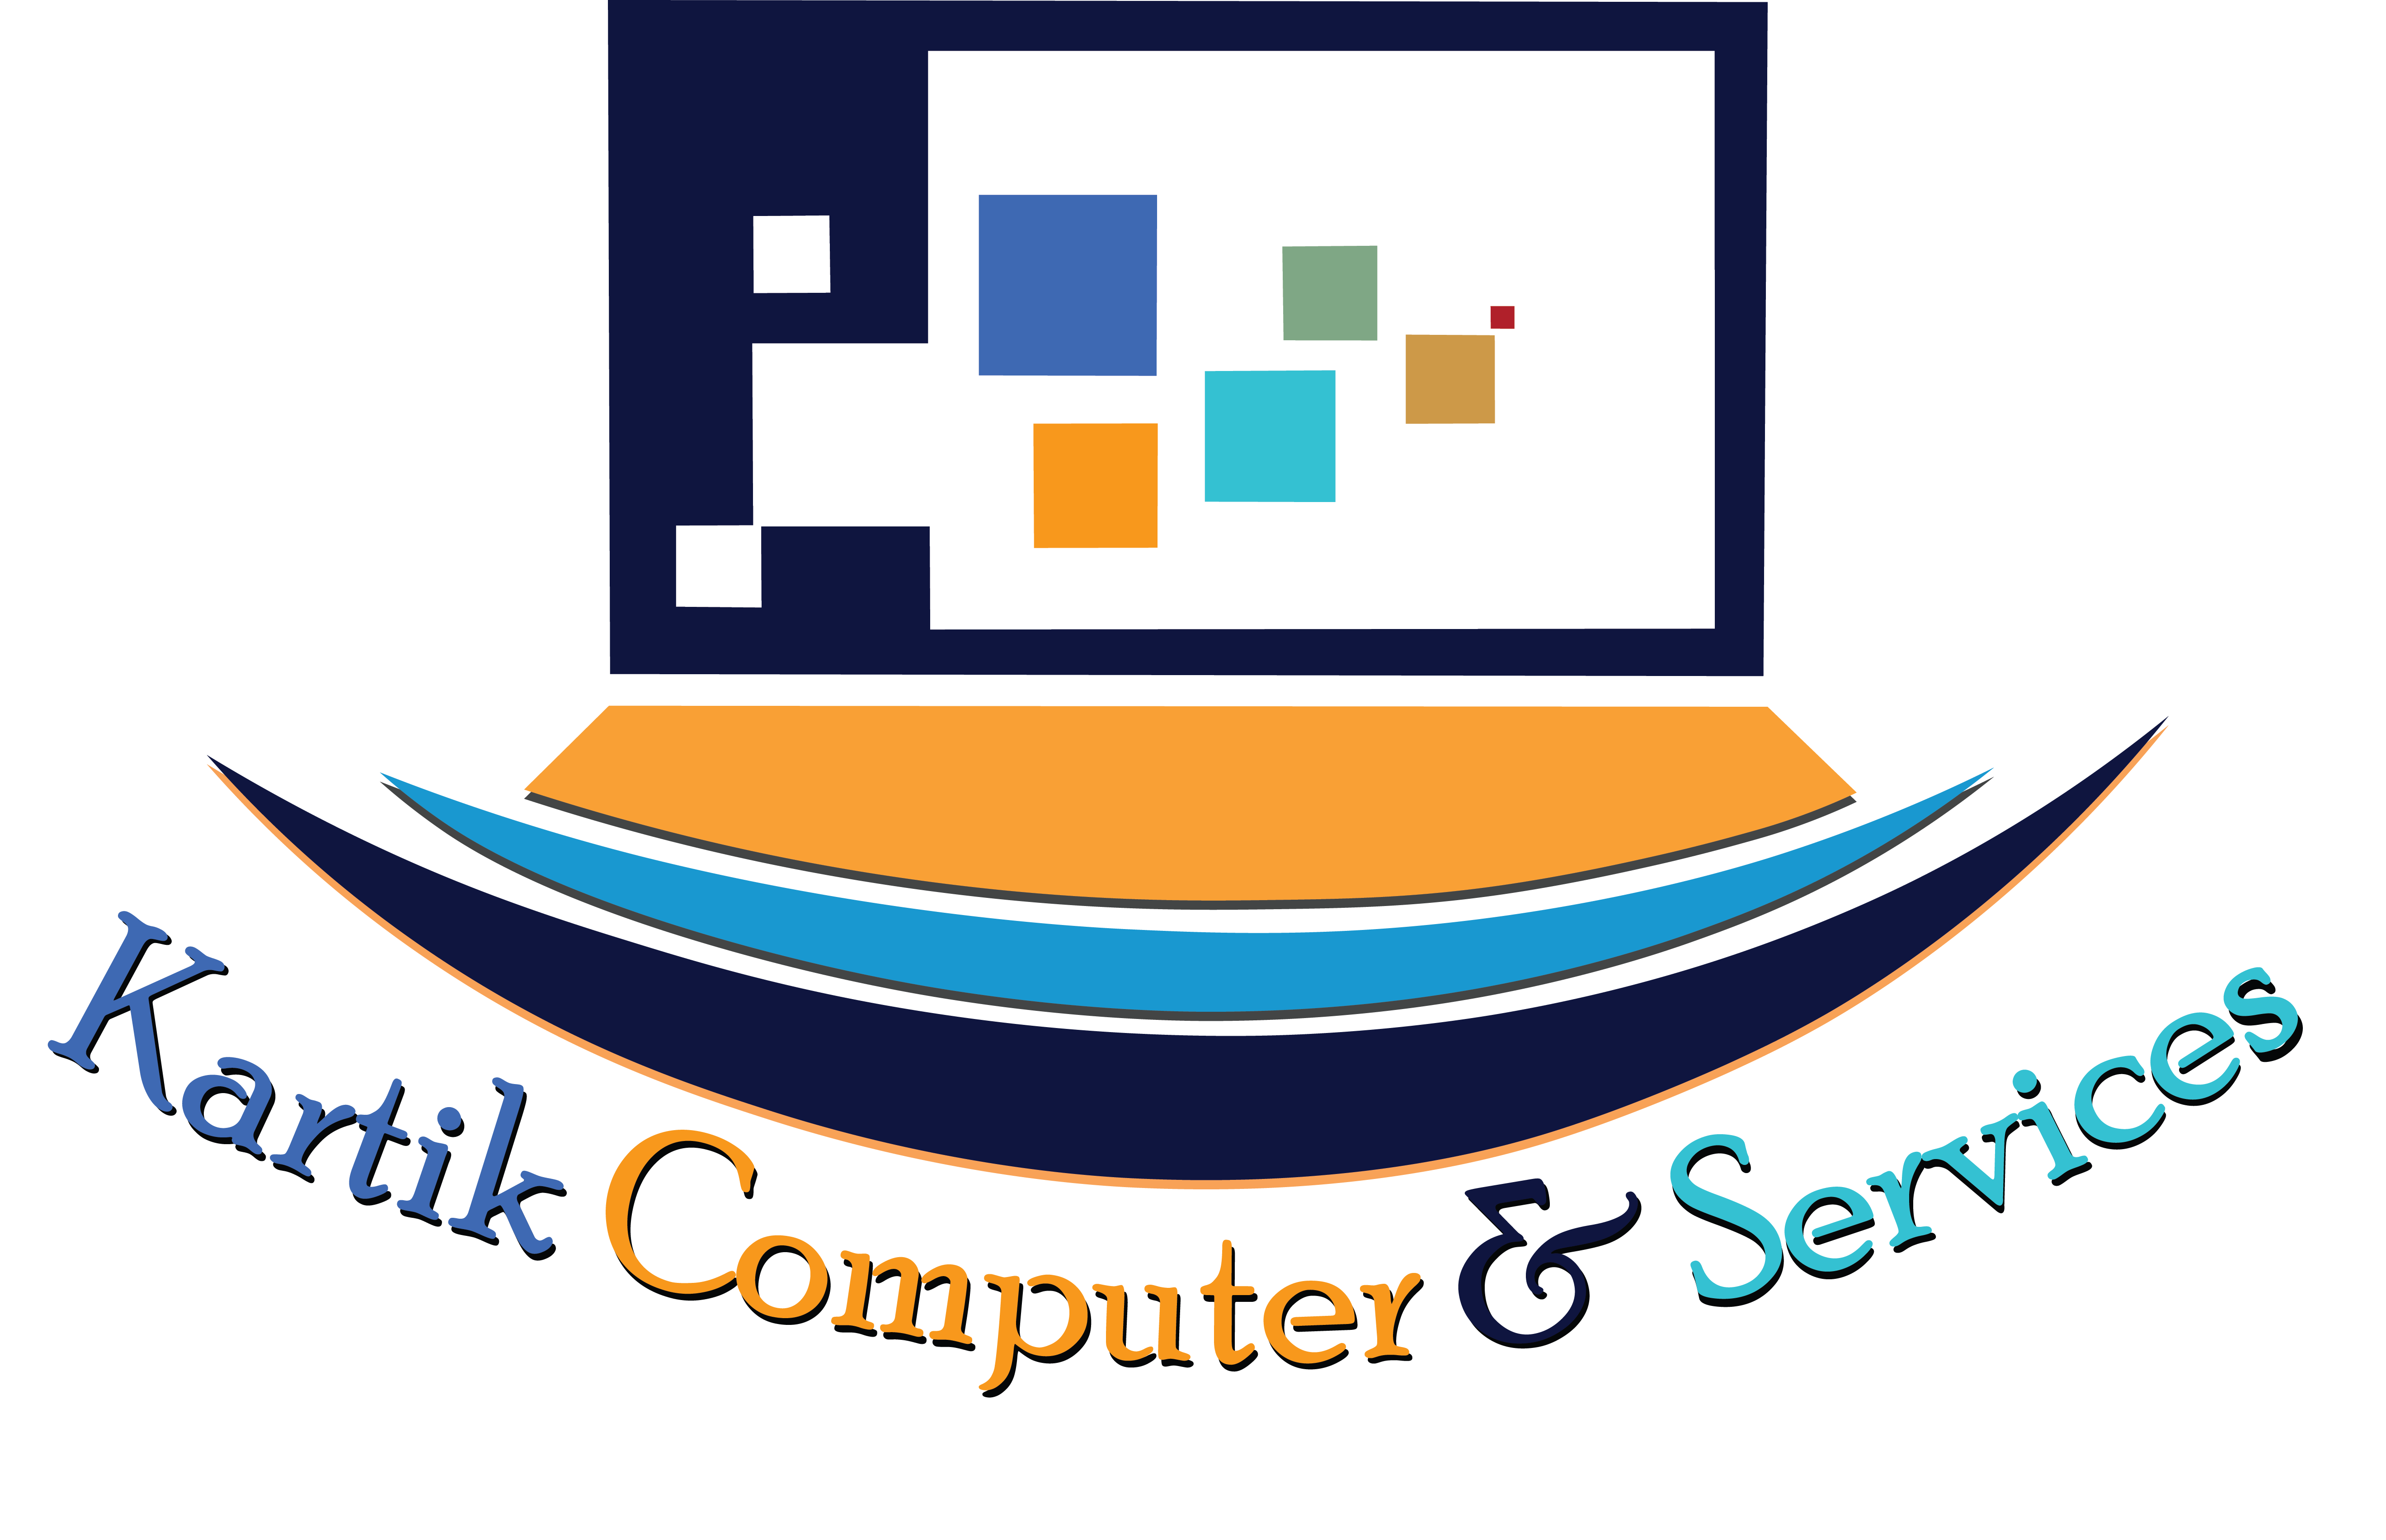 Kartik Computer And Services